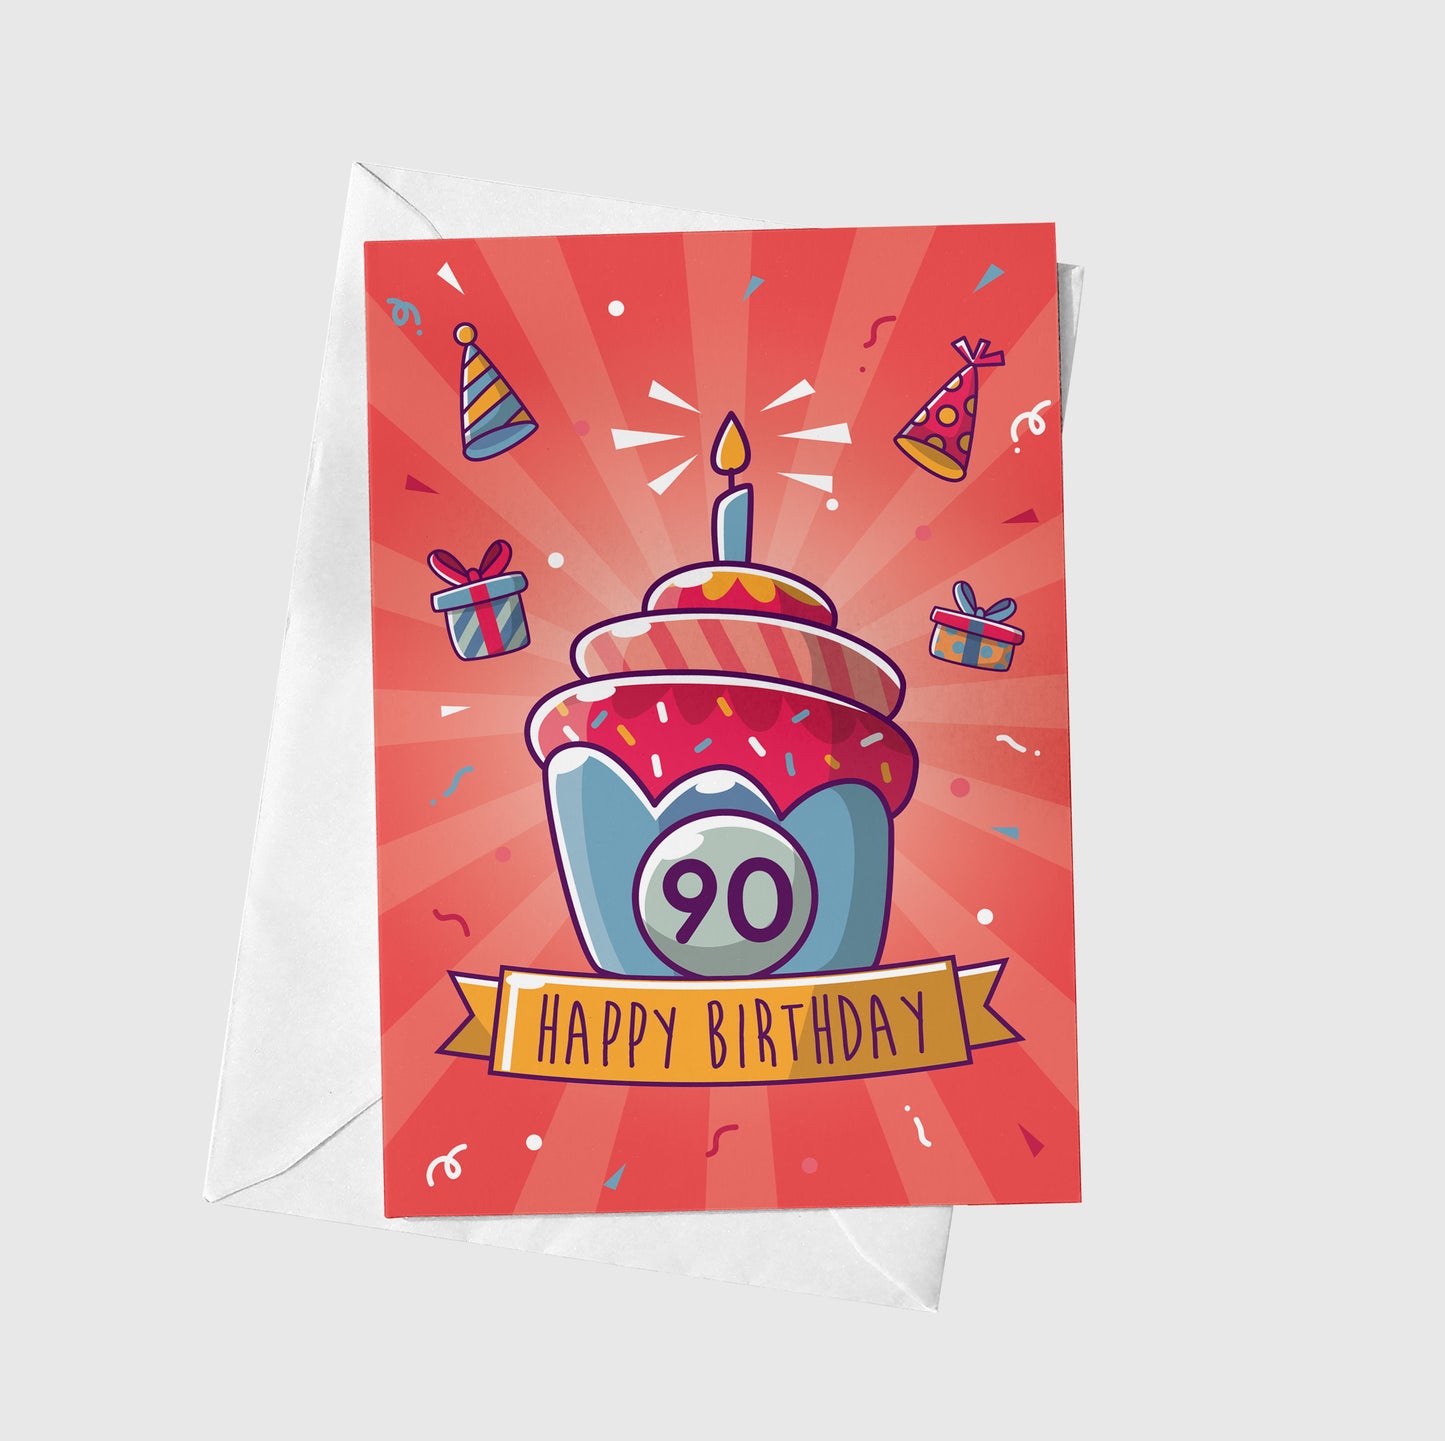 90 - Happy Birthday